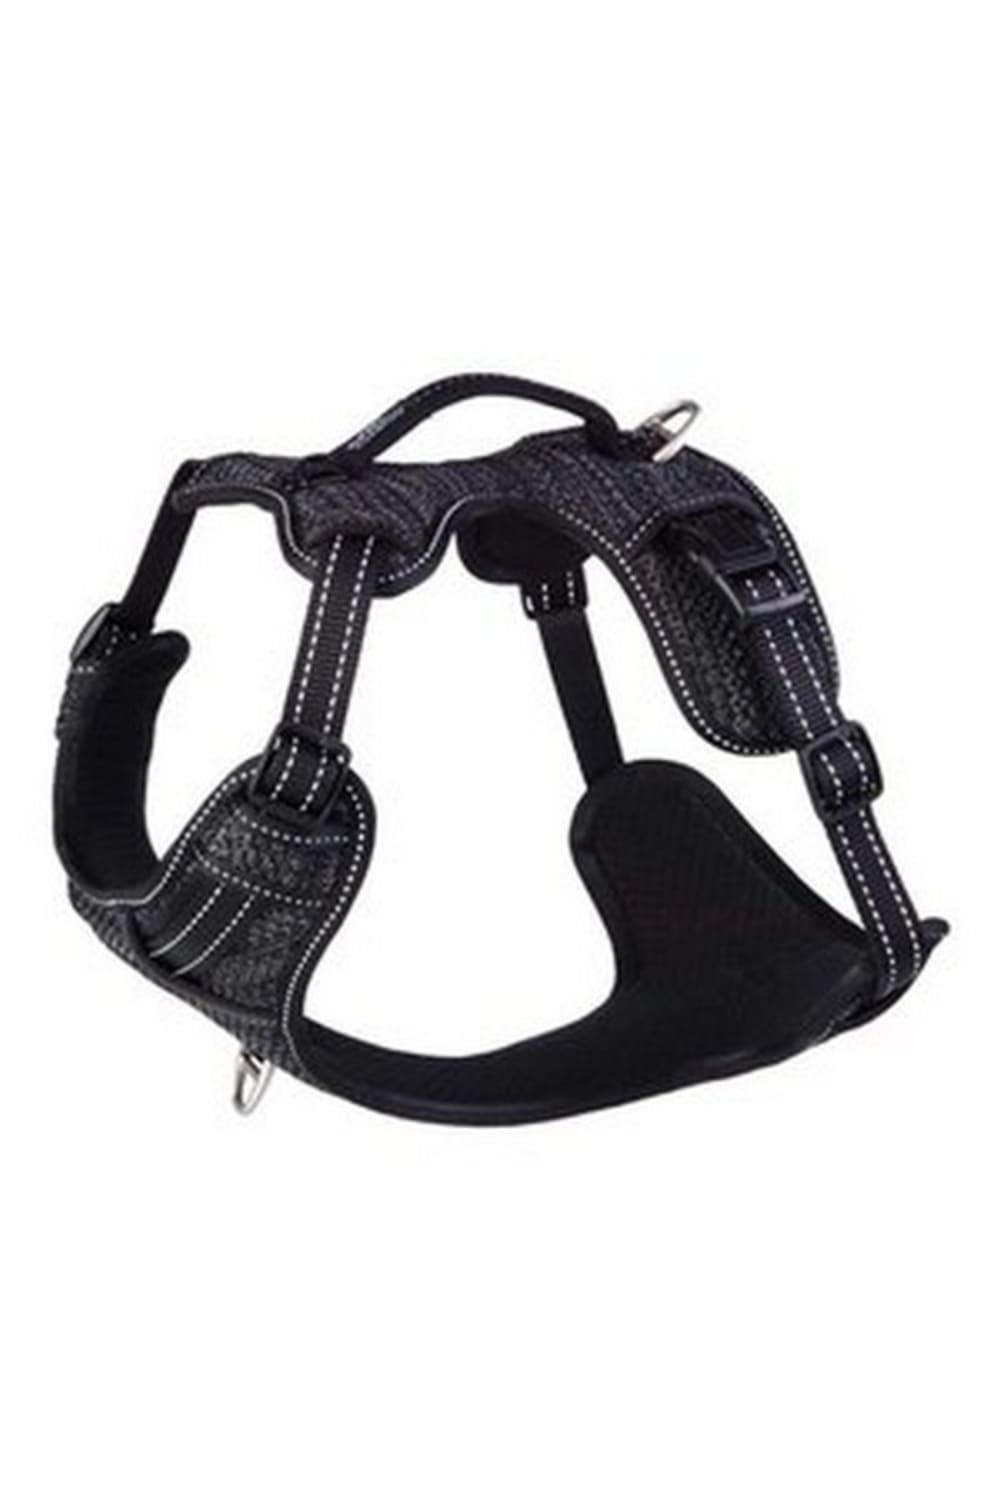 Rogz Explore Dog Harness (Black) (Small)